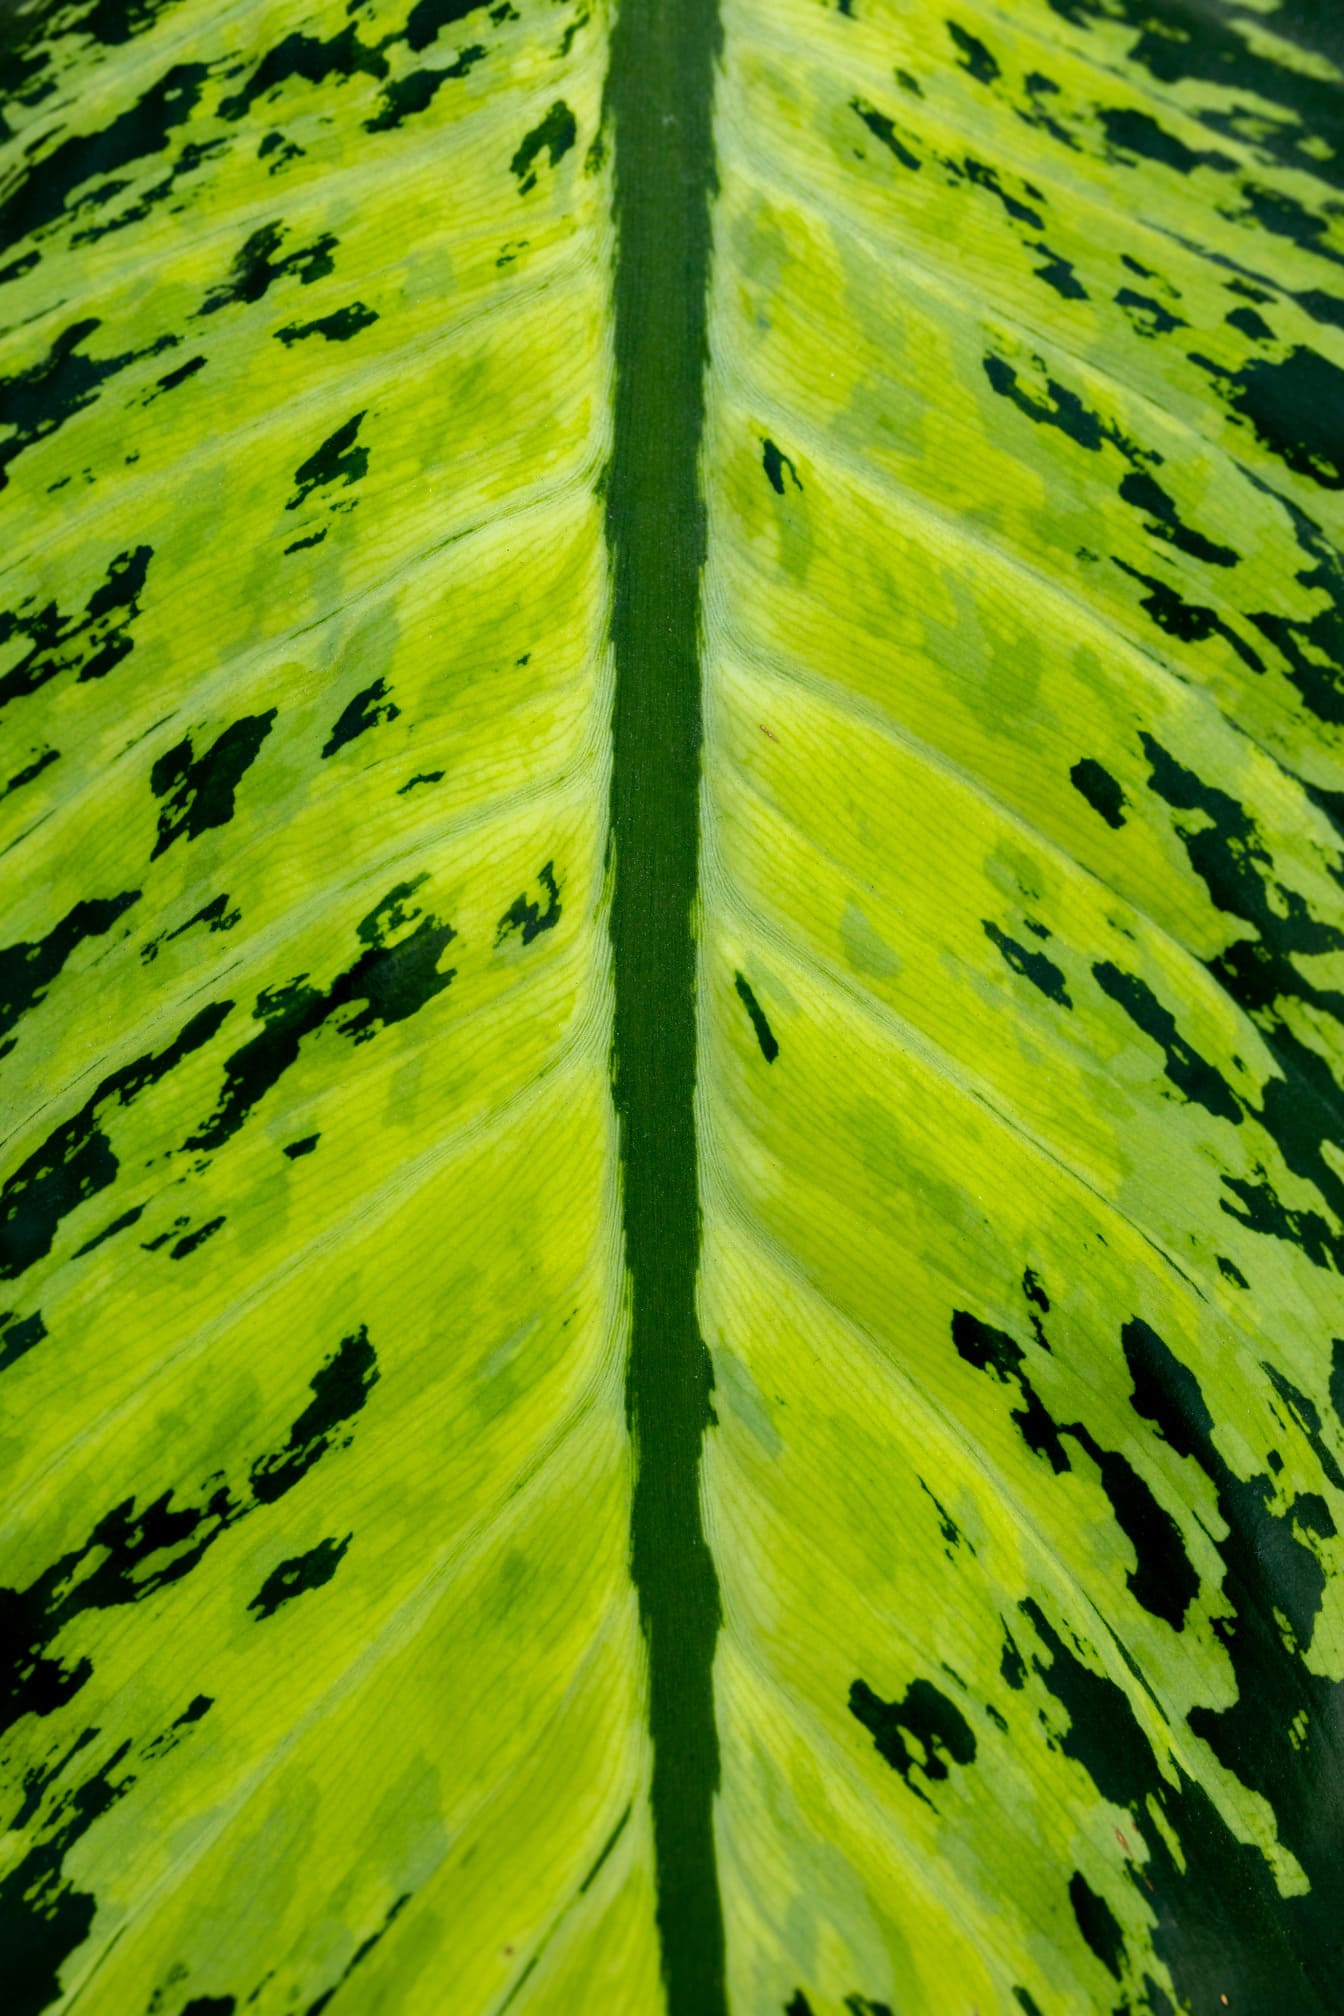 Němý třtina (Dieffenbachia) žlutozelený list zblízka